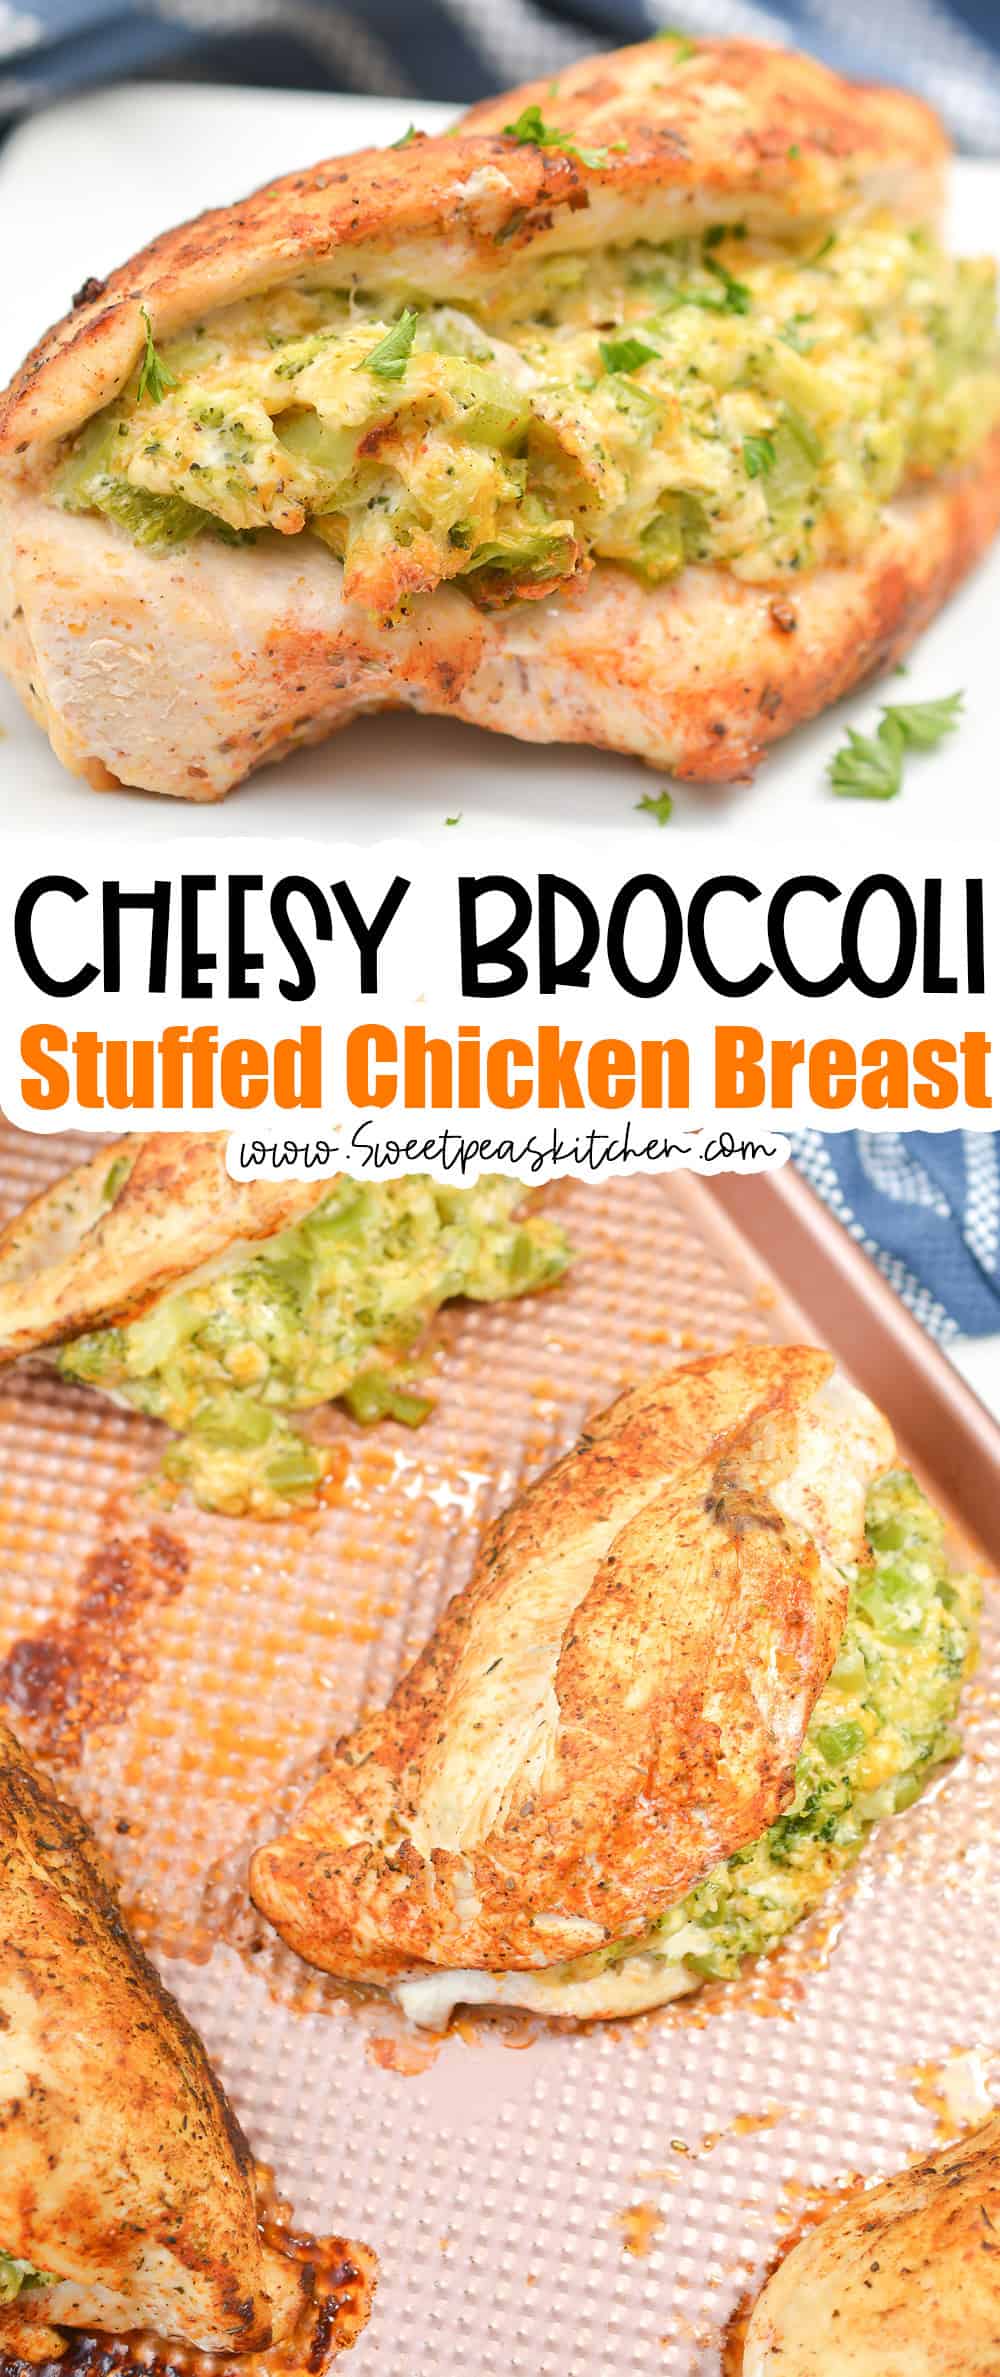 Cheesy Broccoli Stuffed Chicken Breast